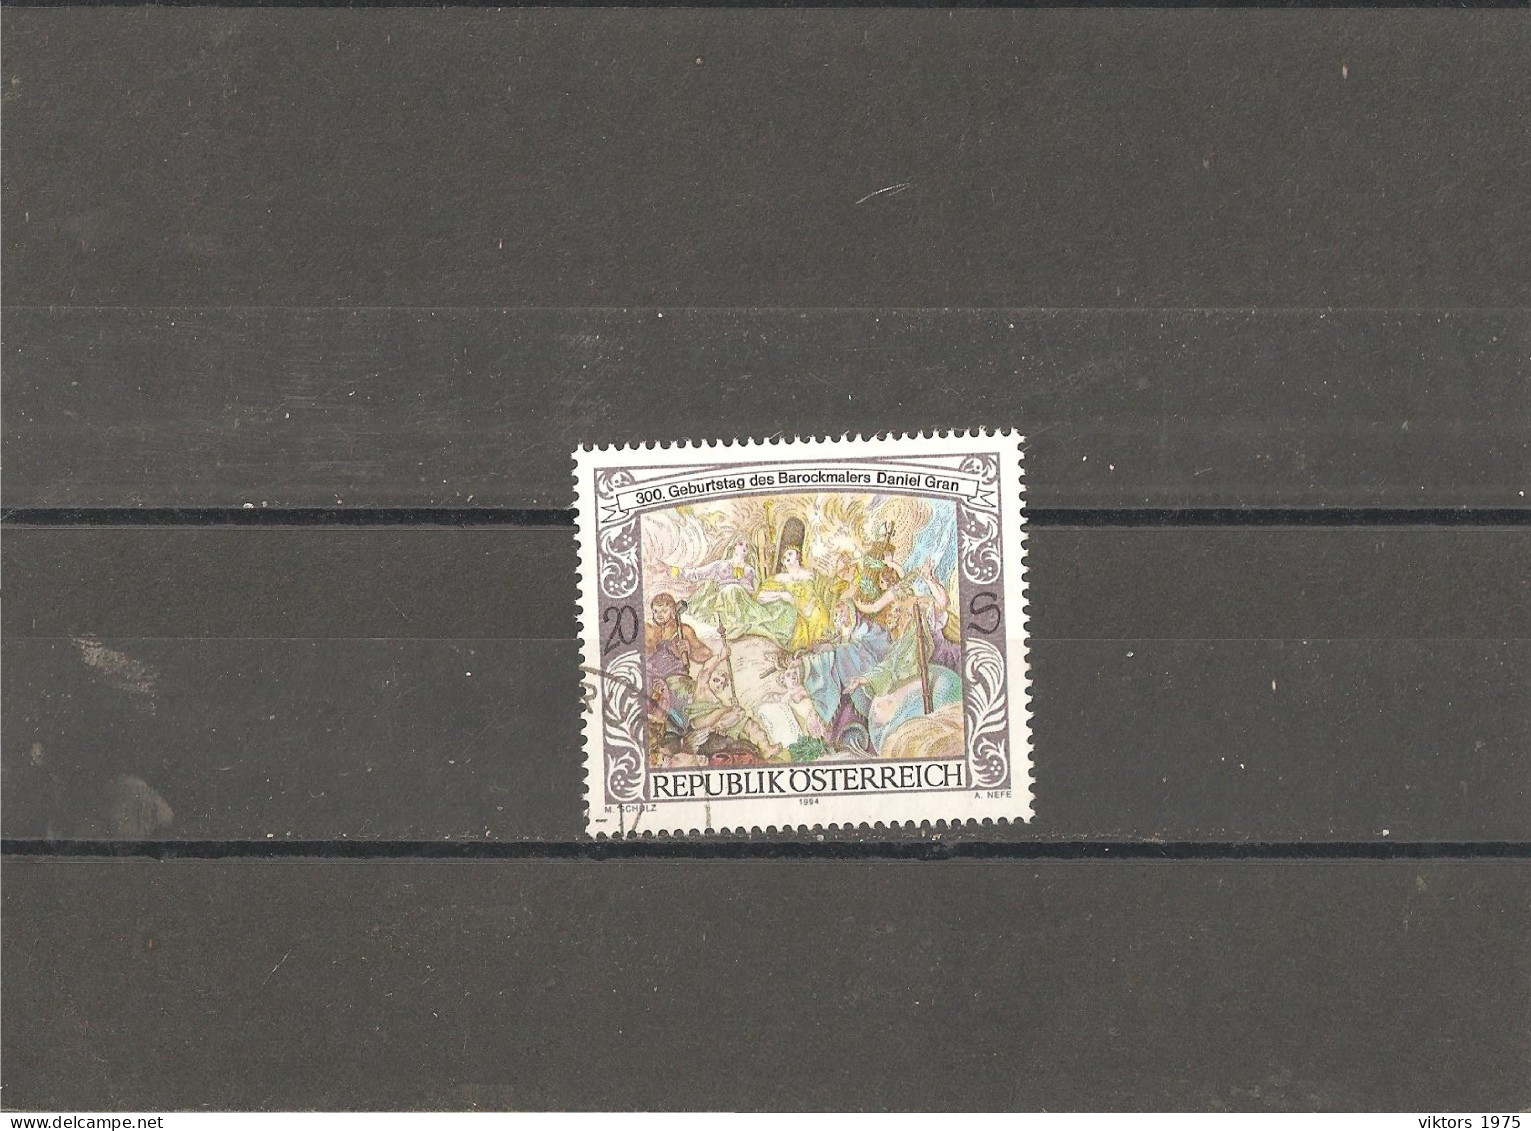 Used Stamp Nr.2125 In MICHEL Catalog - Gebraucht